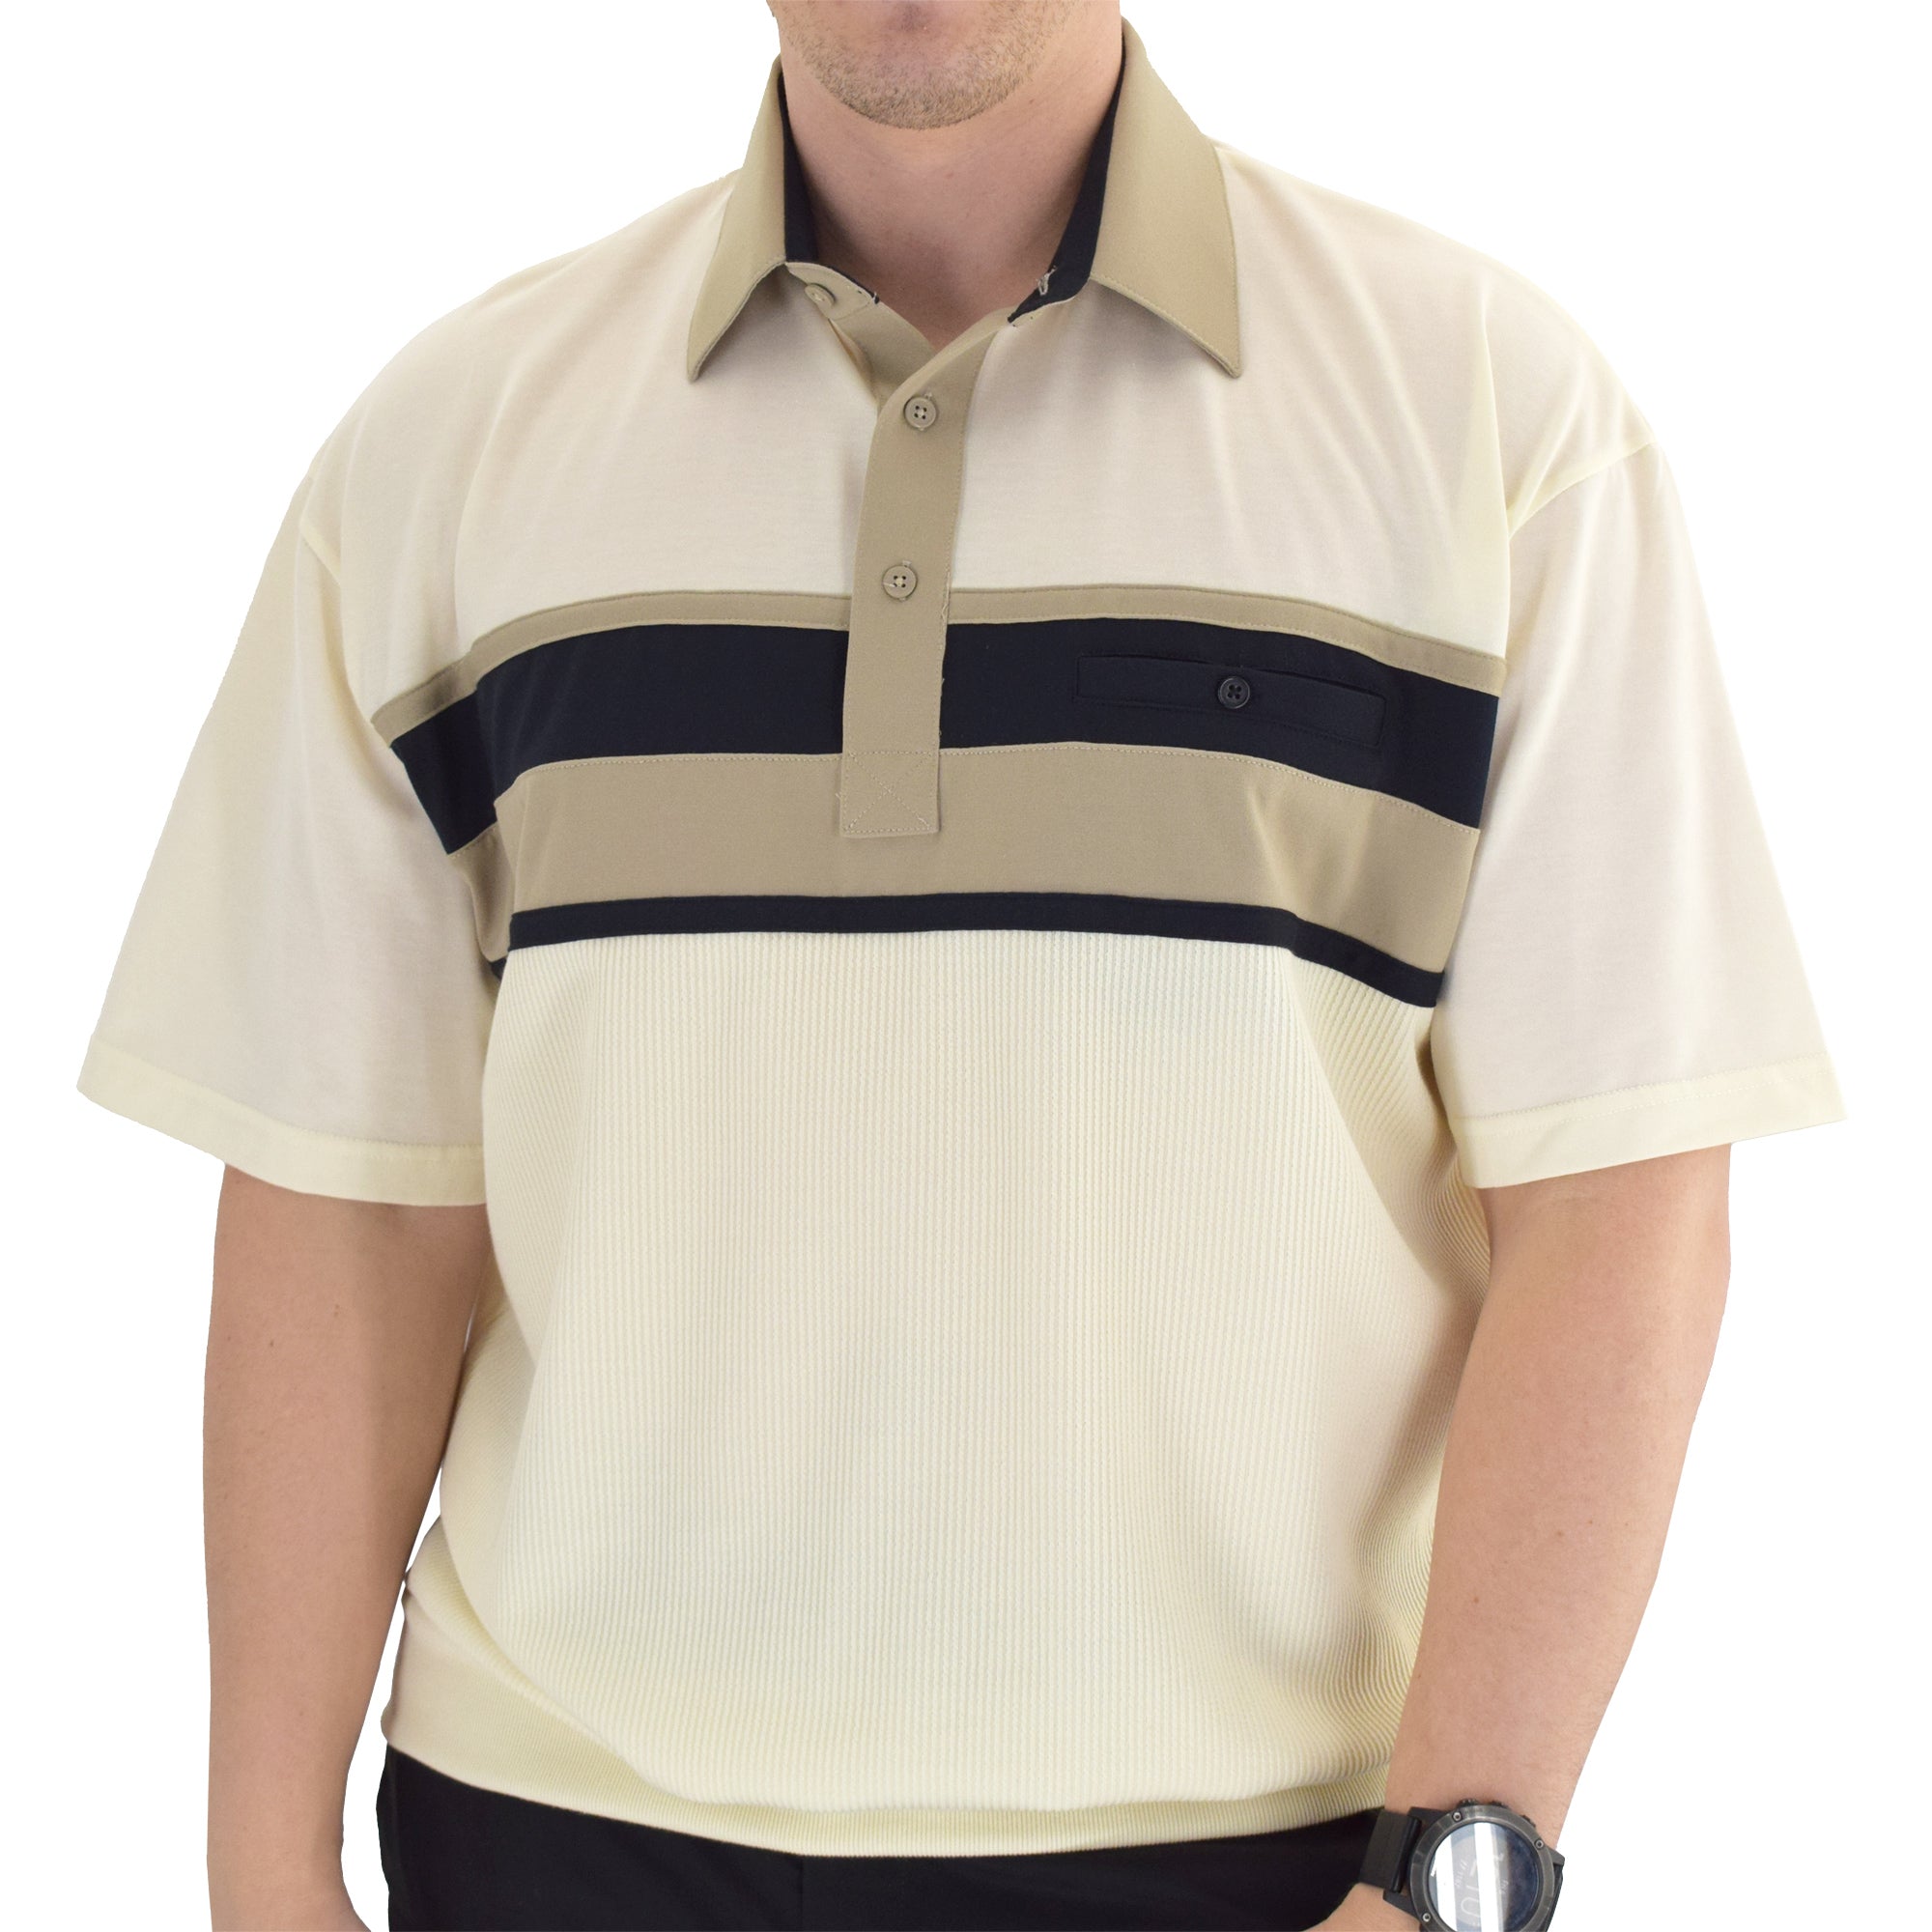 Classics by Palmland Horizontal Short Sleeve Banded Bottom Shirt Natural - 6010-BL12 - theflagshirt